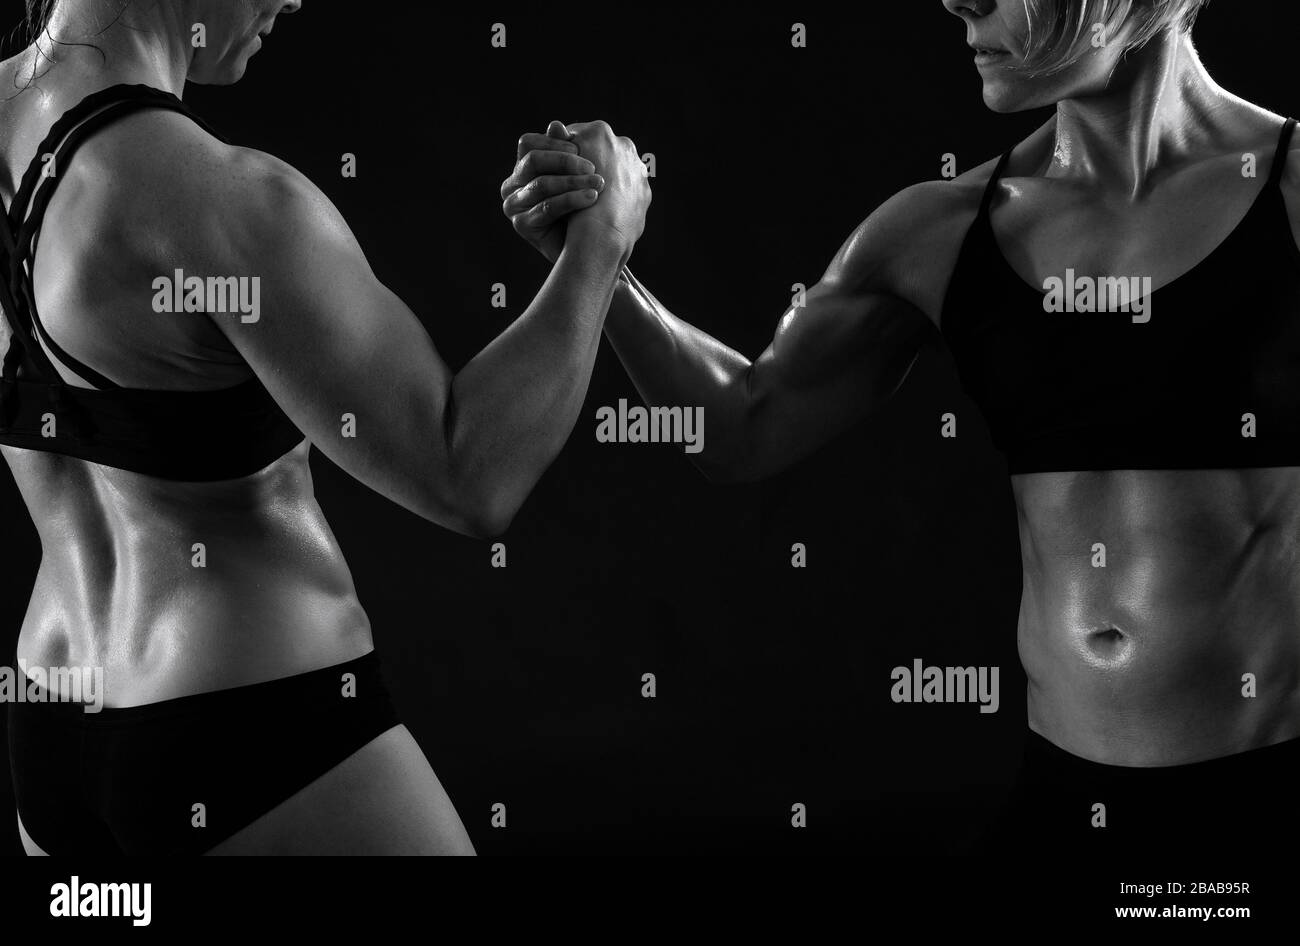 Two female bodybuilders arm wrestling against black background Stock Photo